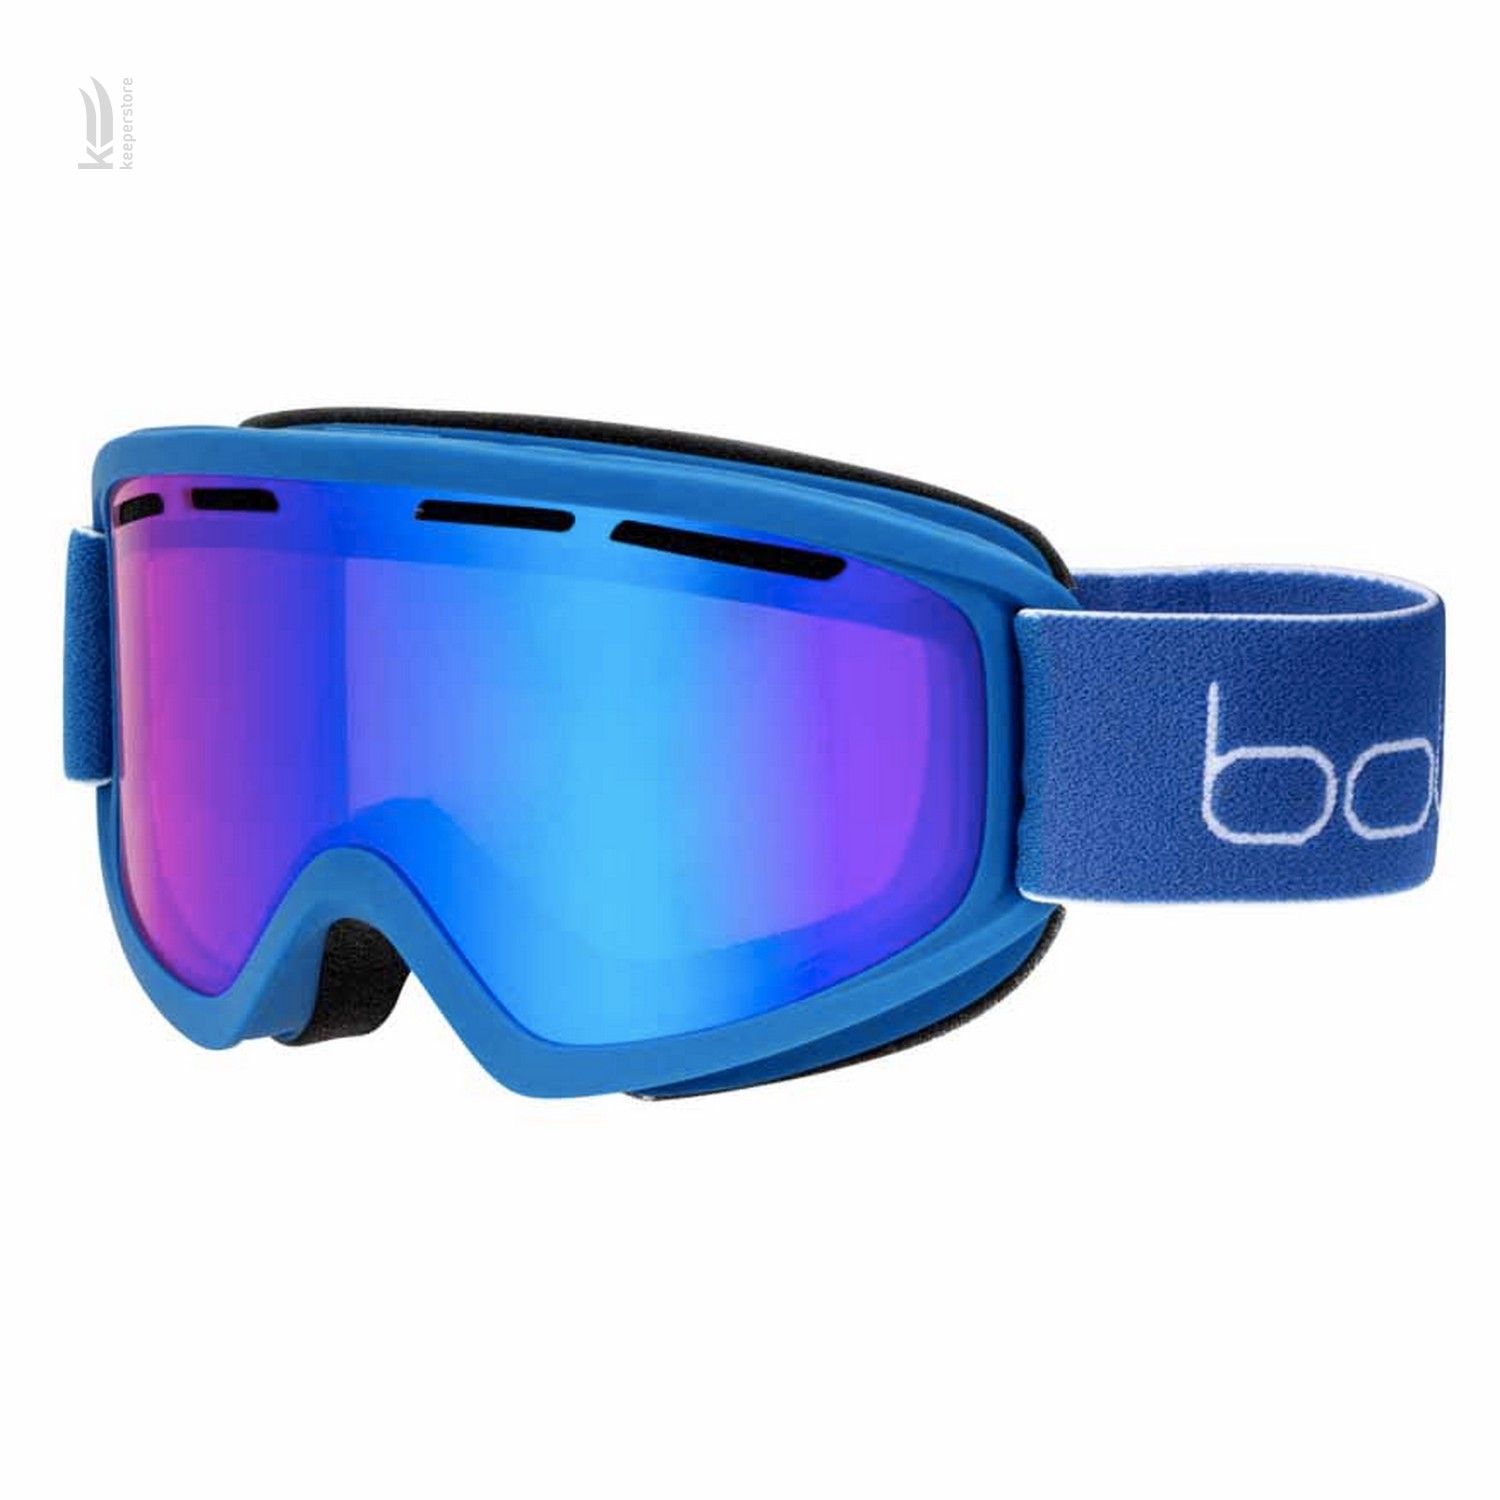 Лыжная маска с УФ защитой Bolle Freeze Plus Yale Blue Matte Light Vermilion Blue 20/21